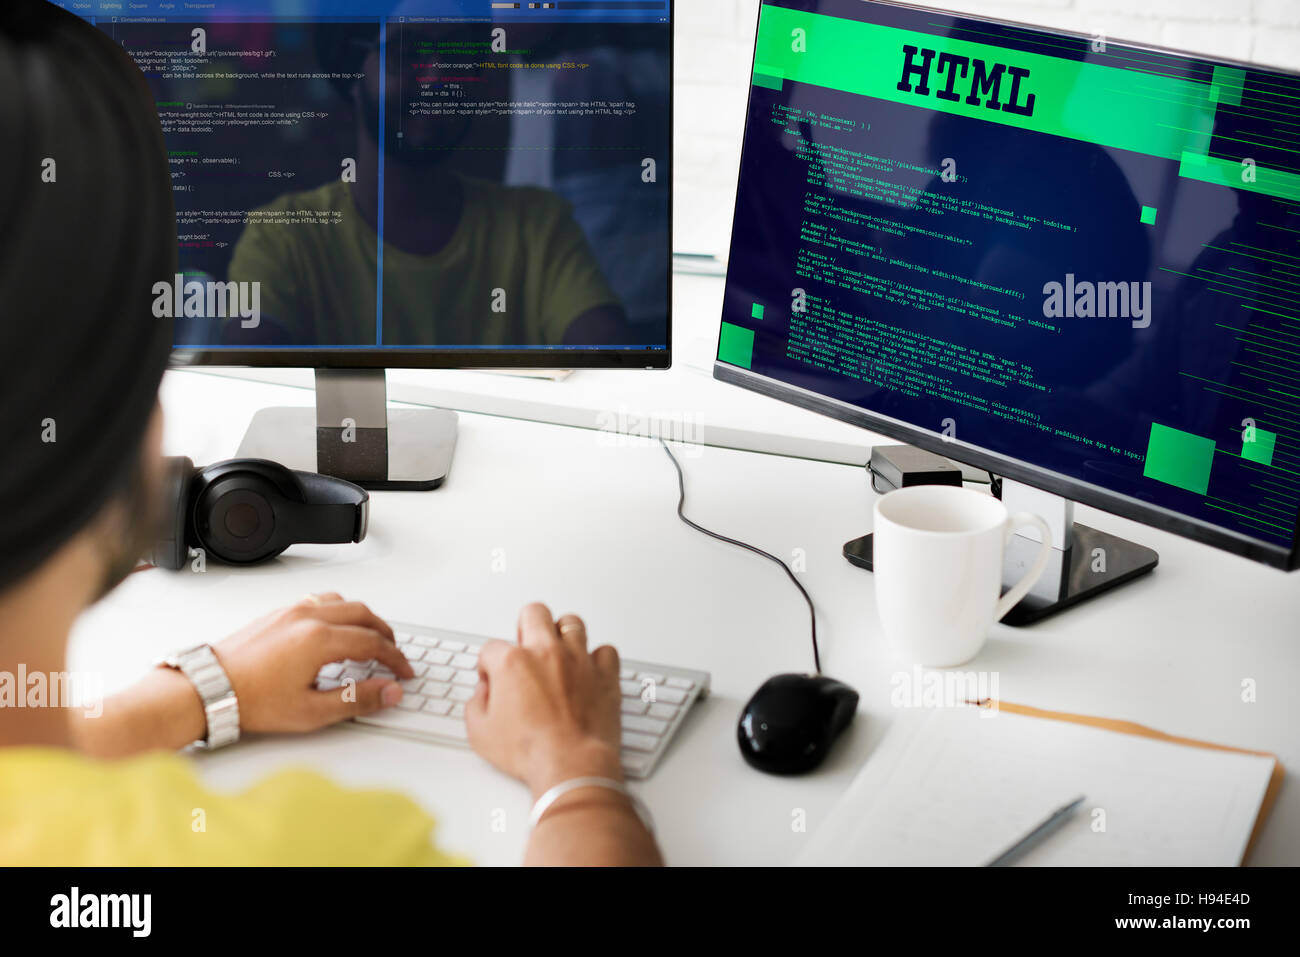 Html Programming Advanced Technology Web Concept Stock Photo